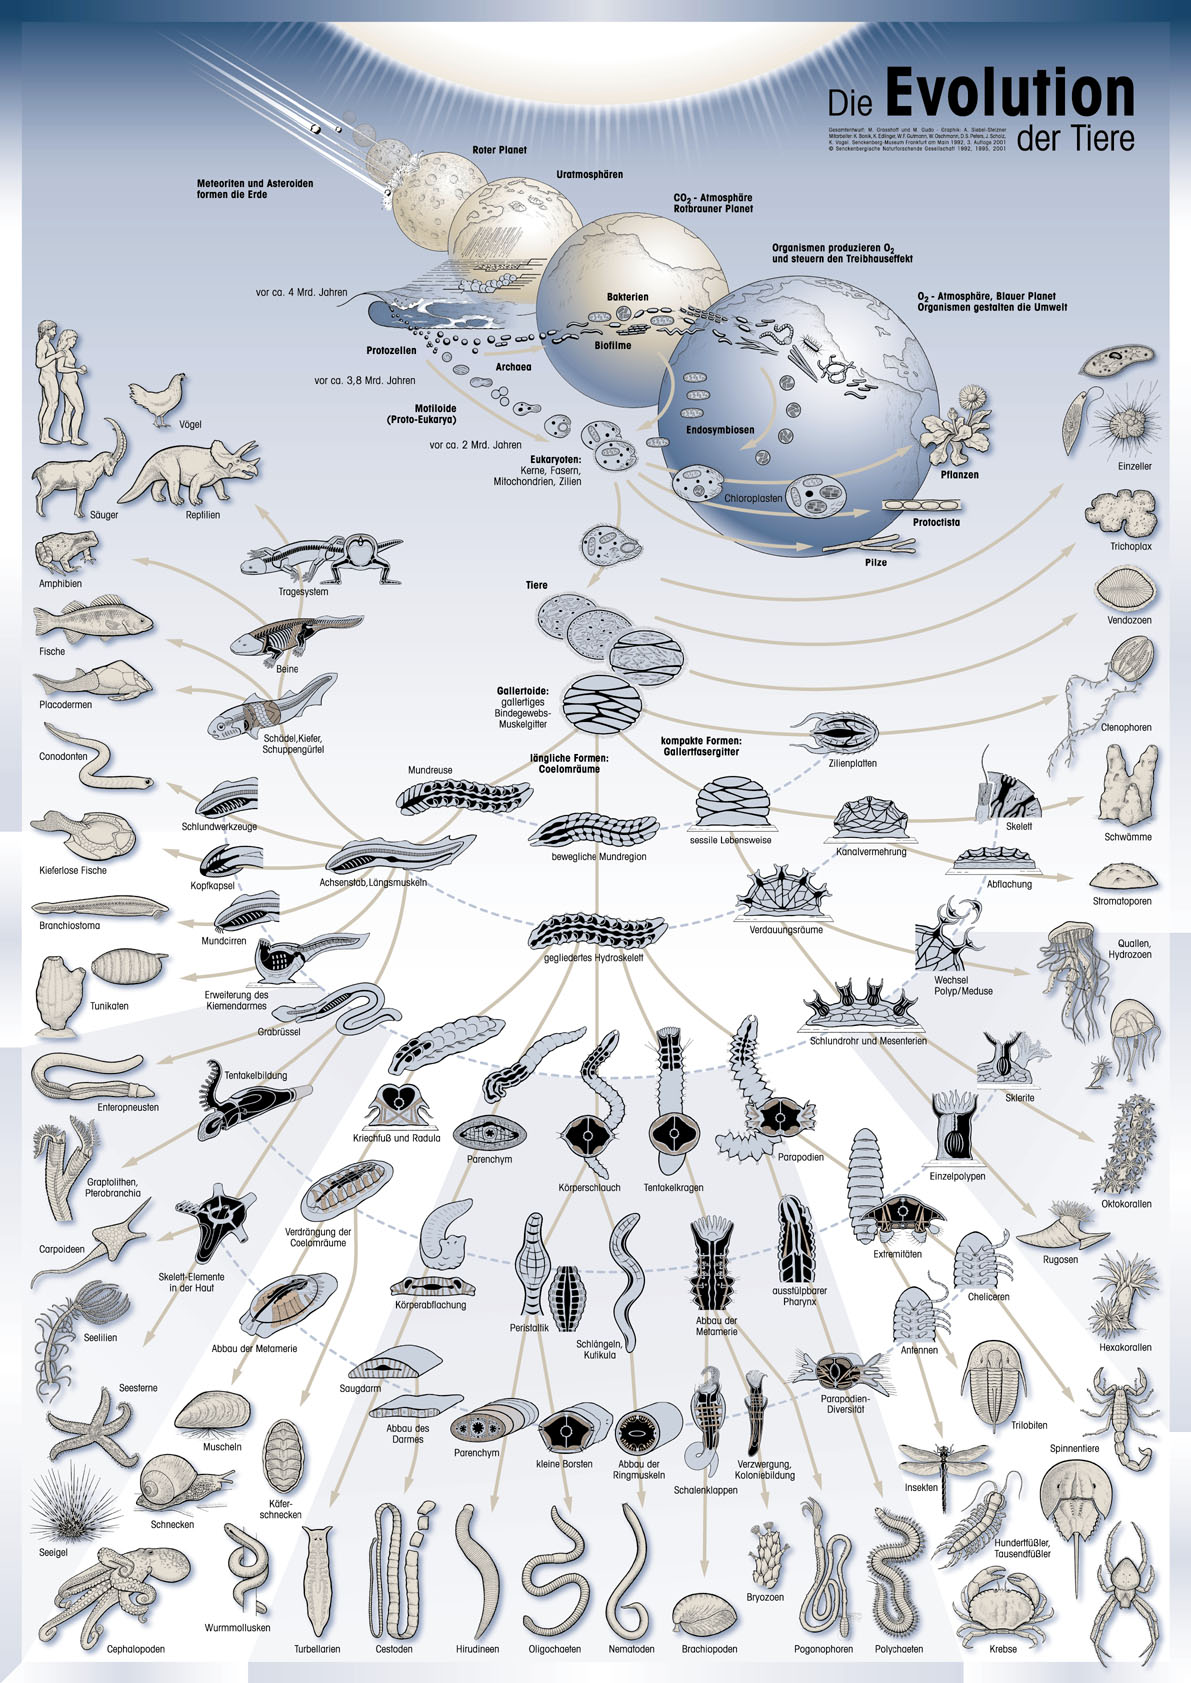 Evolution of animal species